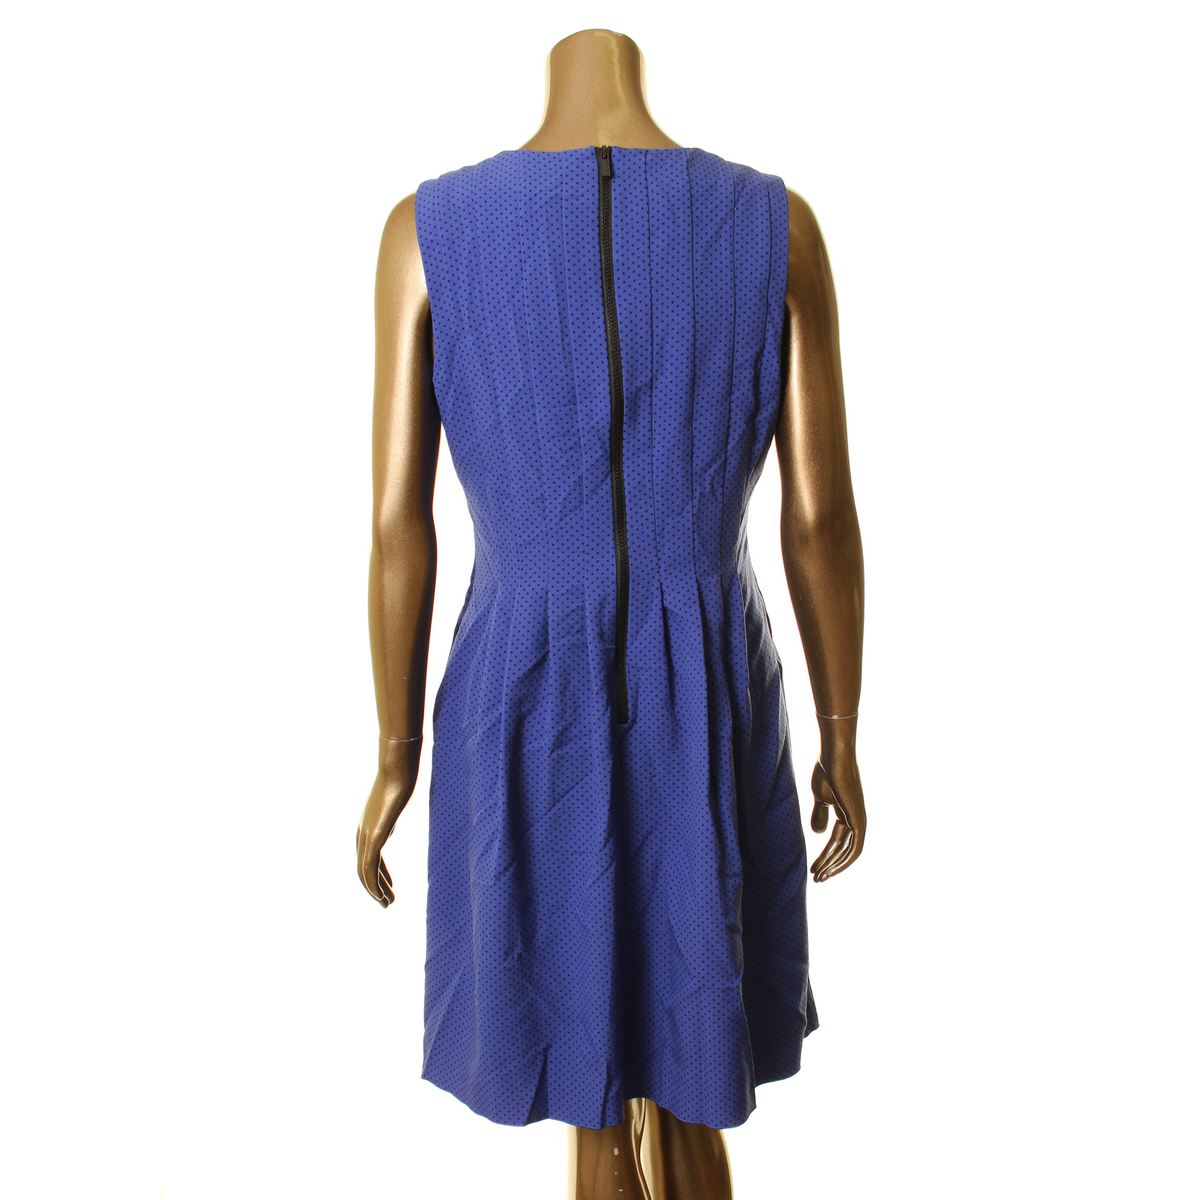 ANNE KLEIN NEW Women's Polka Dot Pleated A-Line Dress TEDO | eBay